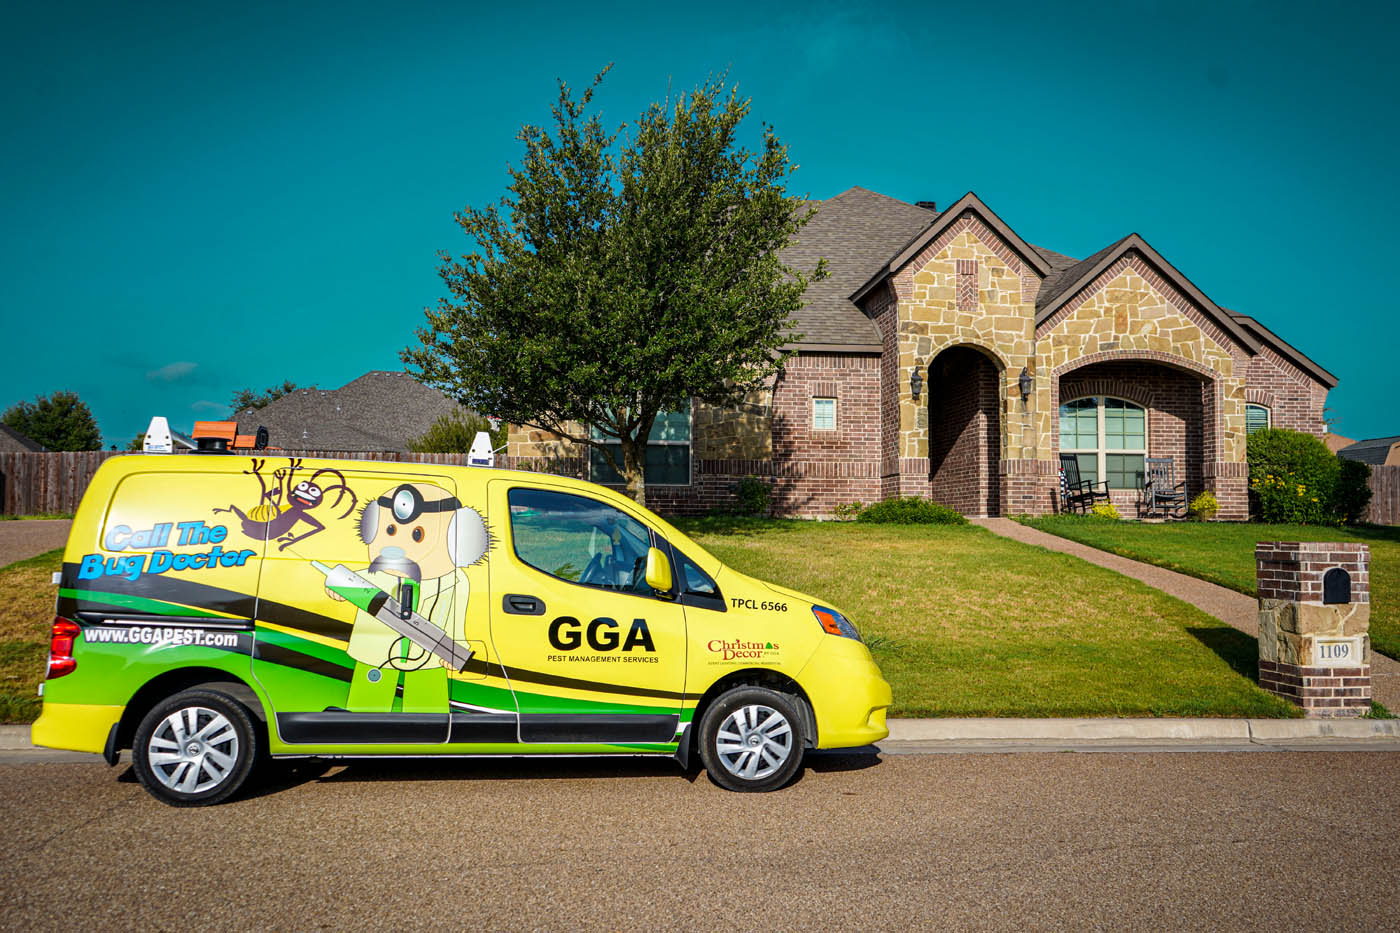 A GGA van outside of a Hillsboro, TX residential house.